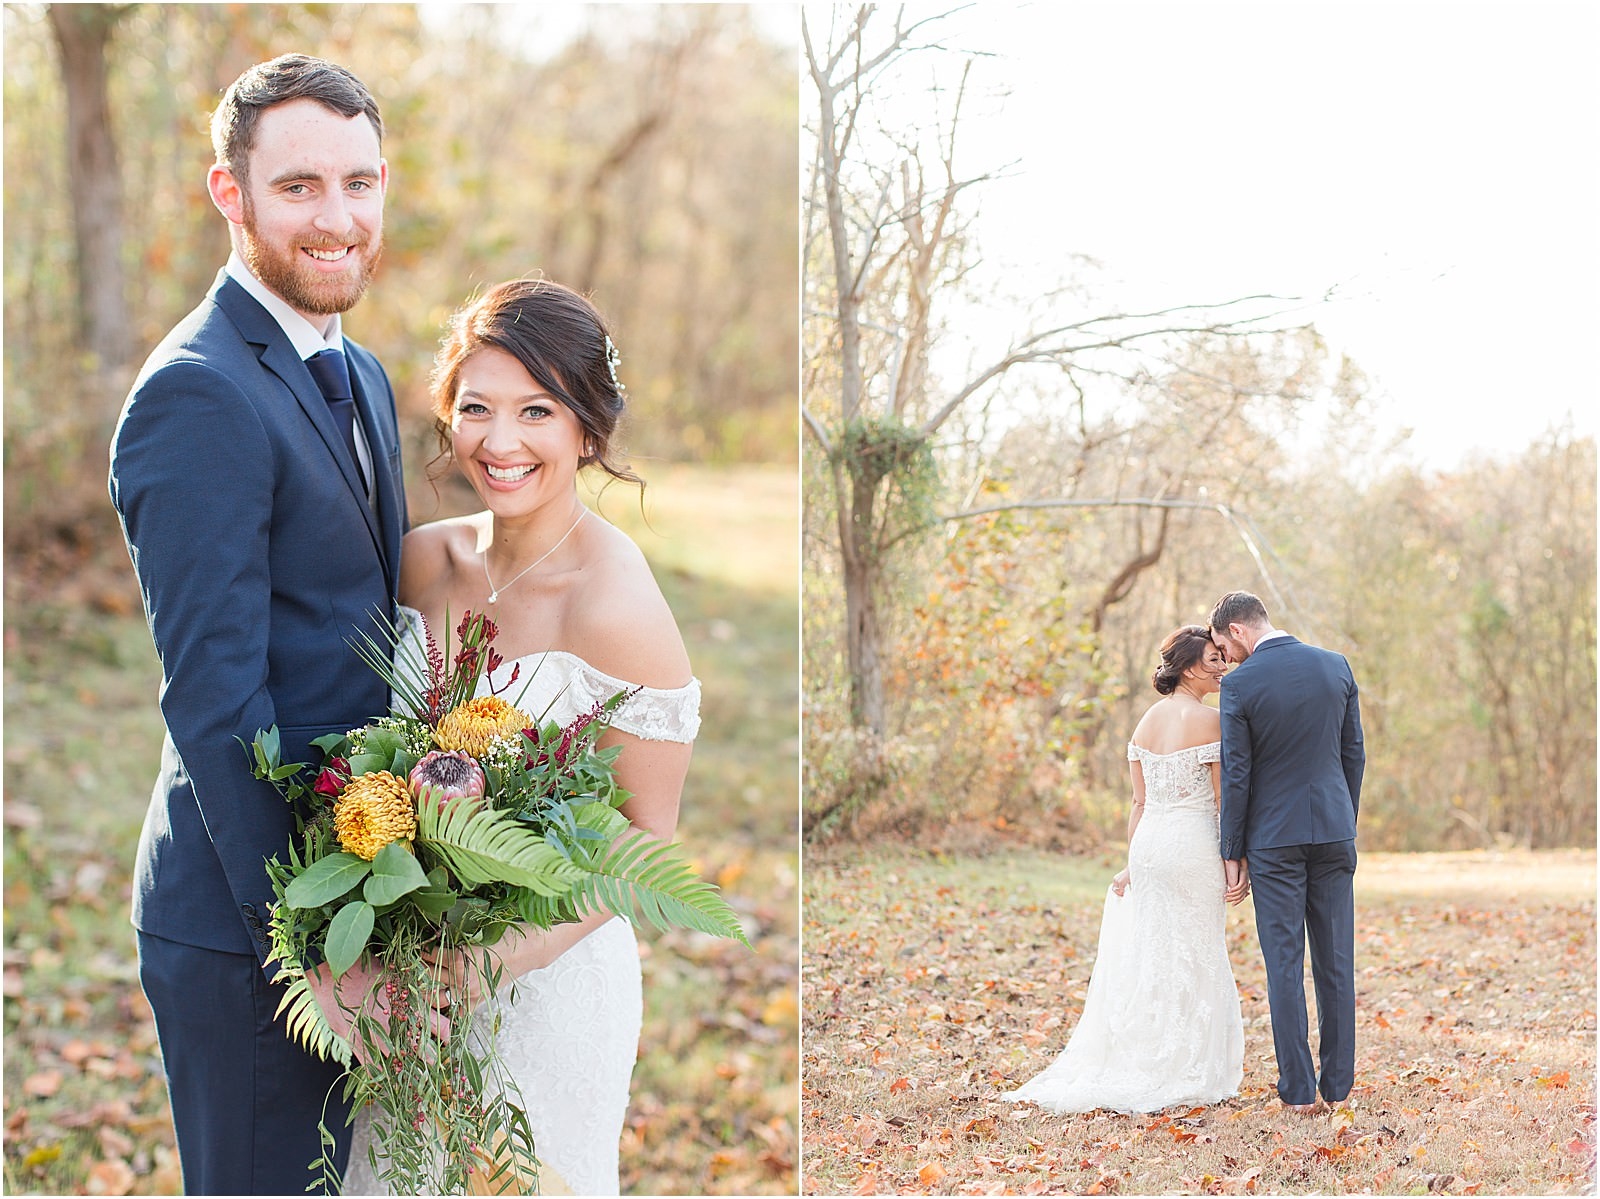 Walker and Alyssa's intimate fall wedding in Southern Indiana. | Wedding Photography | The Corner House Wedding | Southern Indiana Wedding | #fallwedding #intimatewedding | 039.jpg